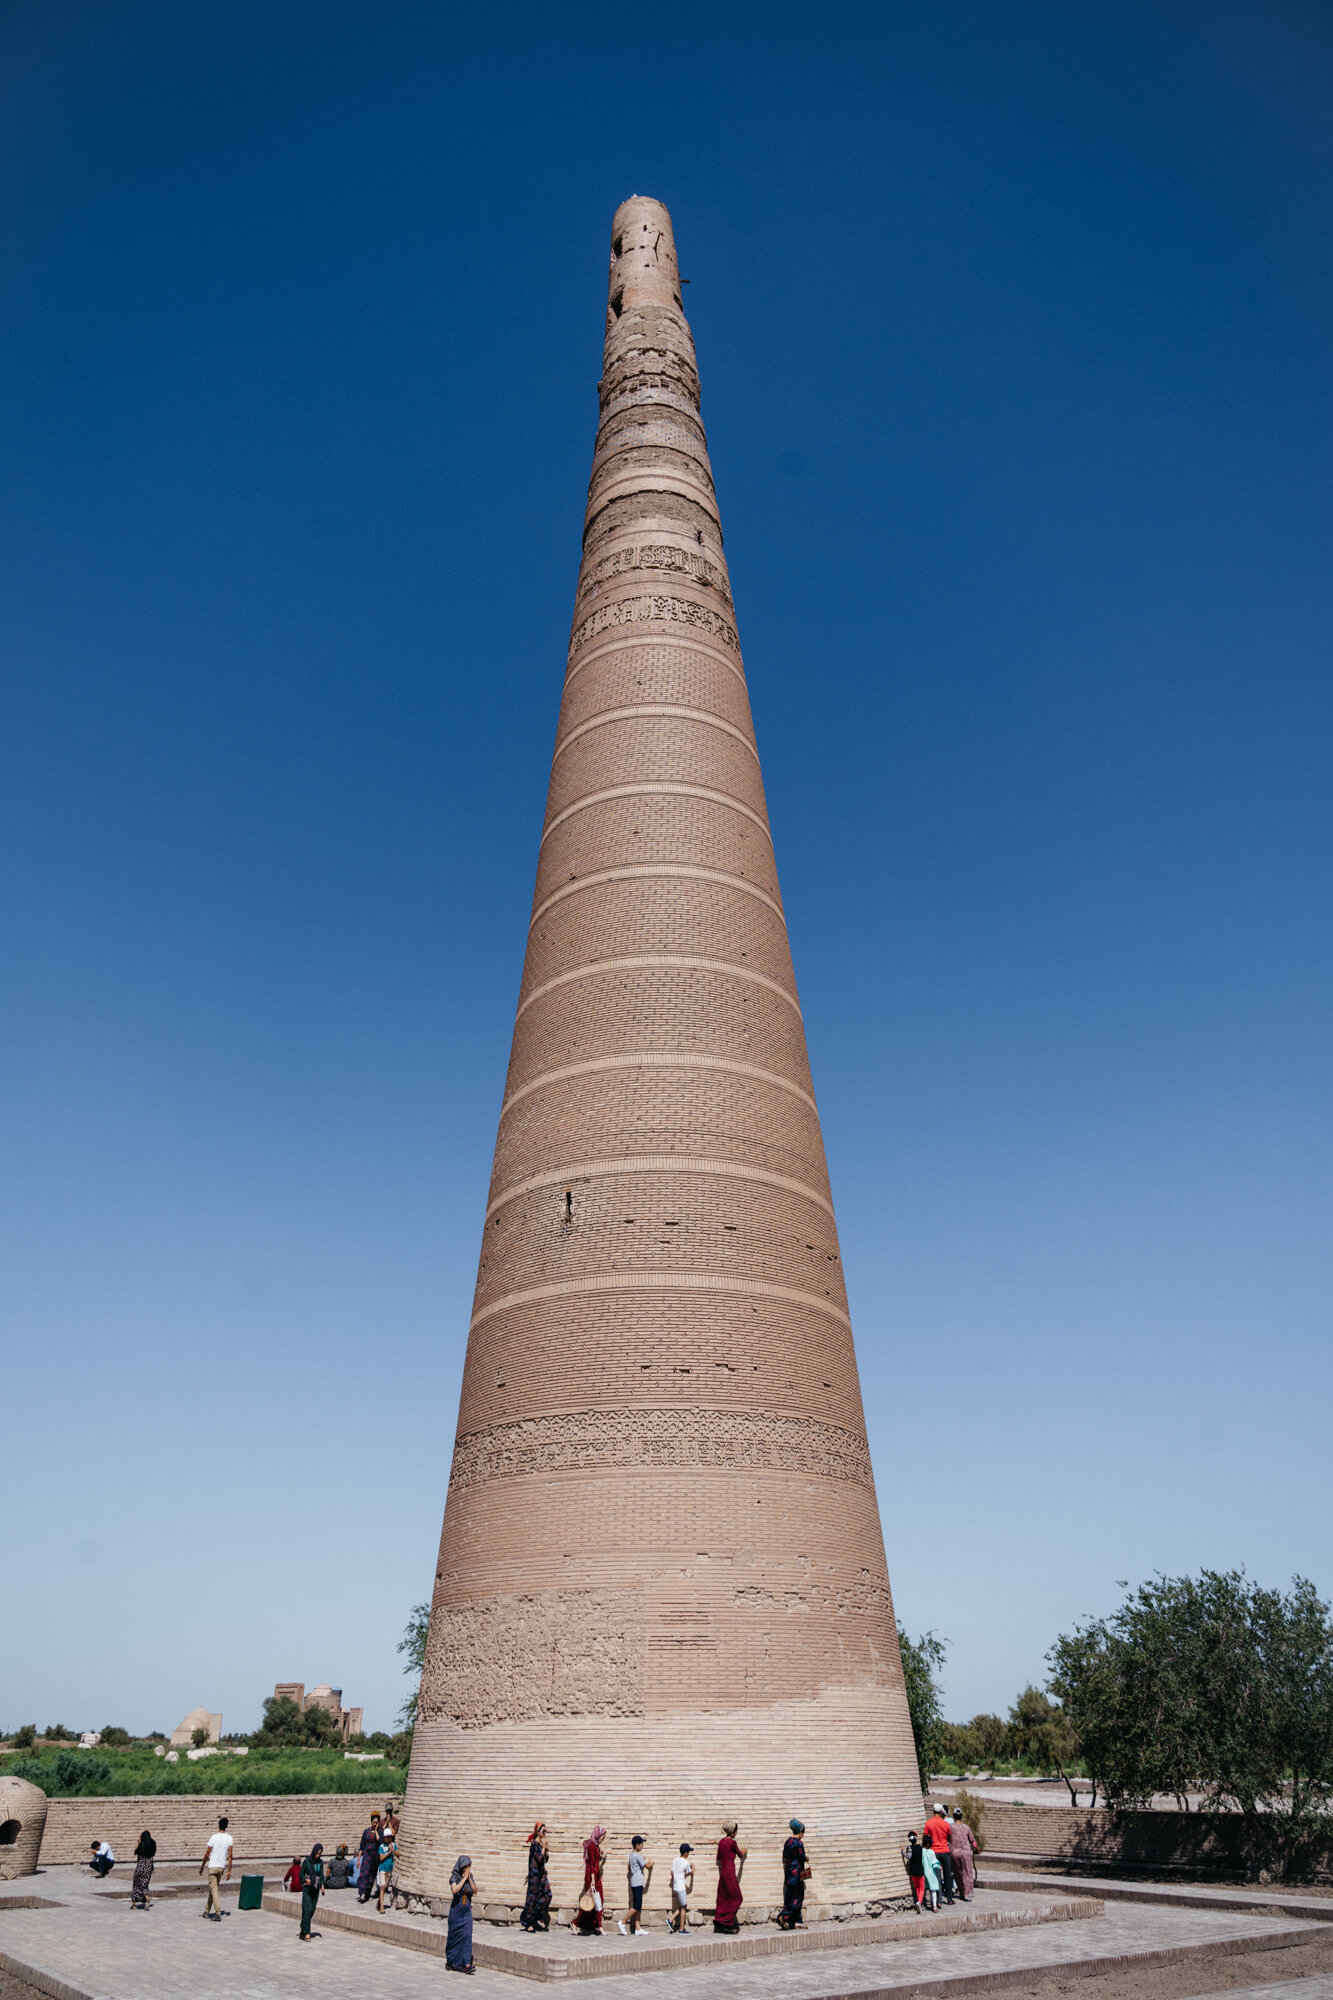  The impressive 60 metre tall Kutlug-Timur Minaret dates to the 11th and 12th centuries 